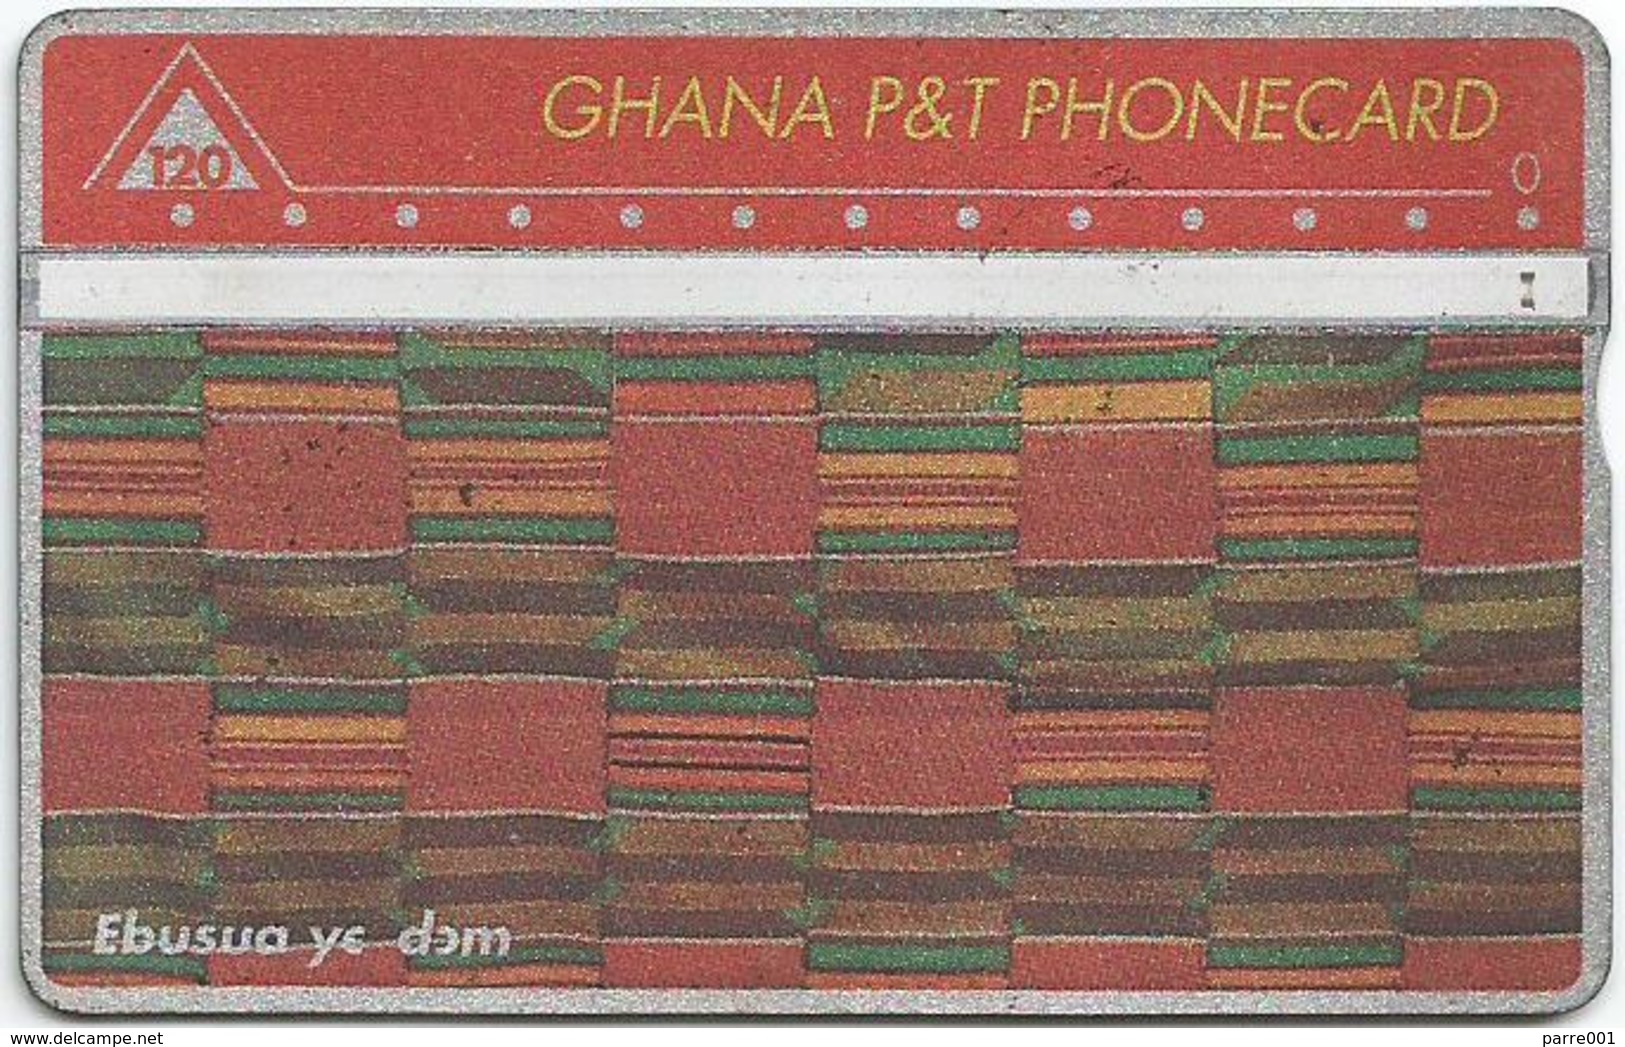 Ghana P&T 120 UT Kente Cloth Ebusua Ye Dem Phonecard - Ghana